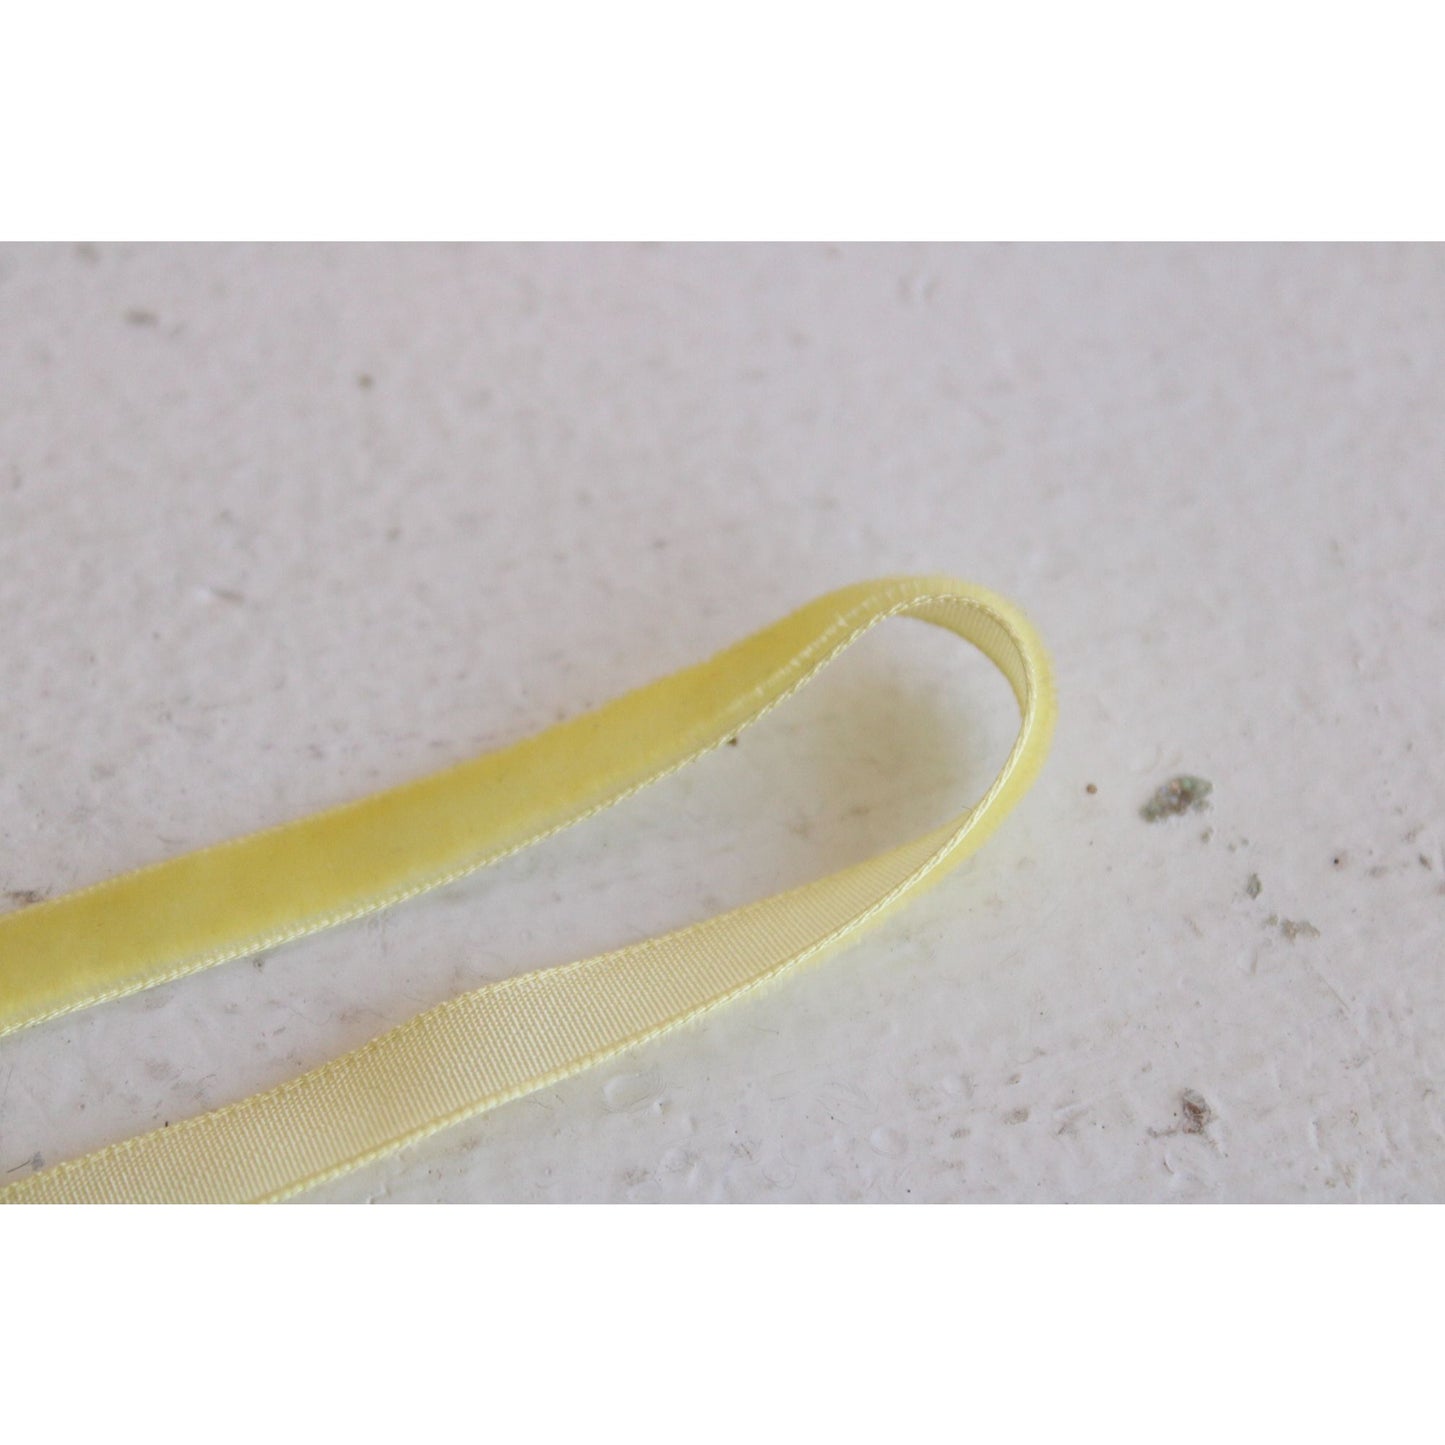 Vintage 1980s Velvet Ribbon in Yellow, 3 yards 7mm Wide